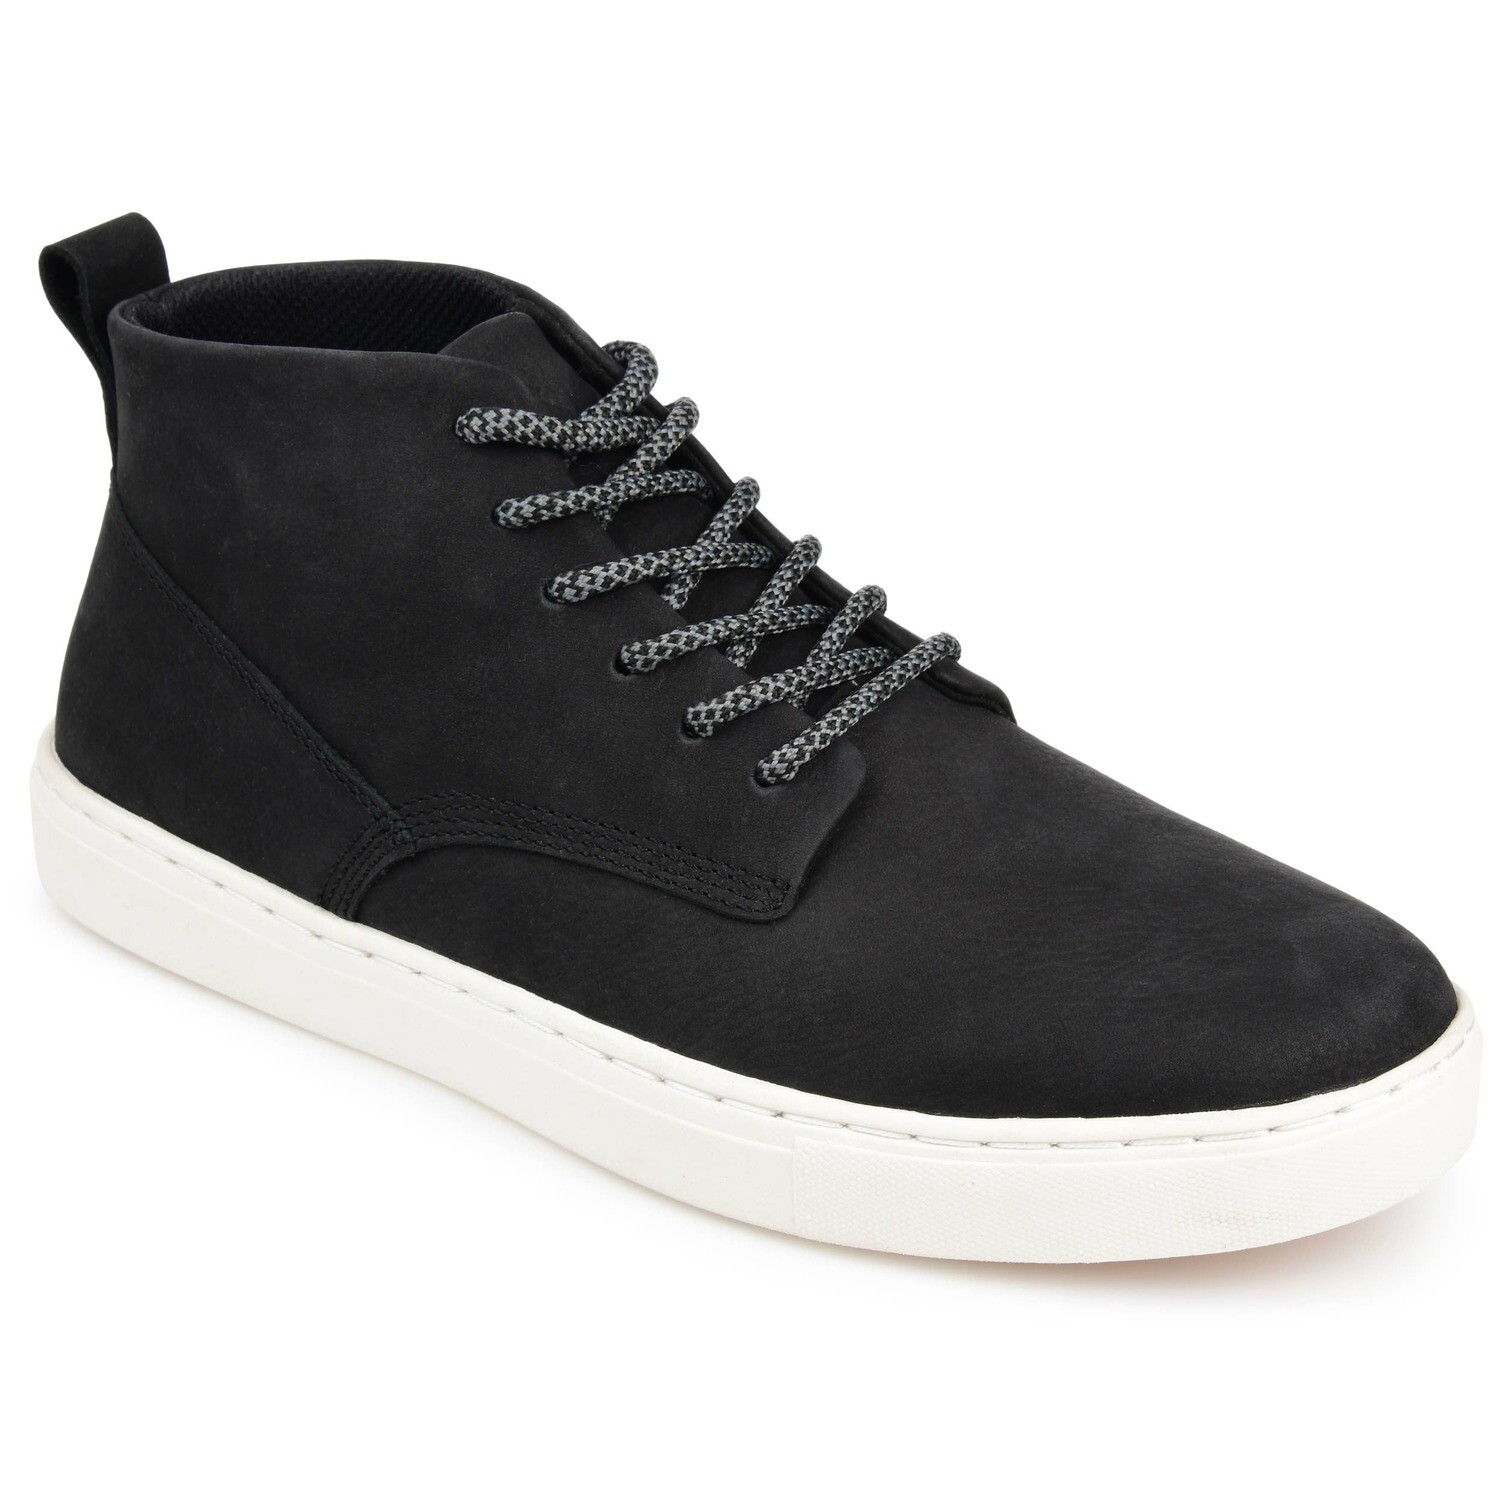 Men's Thomas & Vine Territory Rove Casual Leather Sneaker Boot